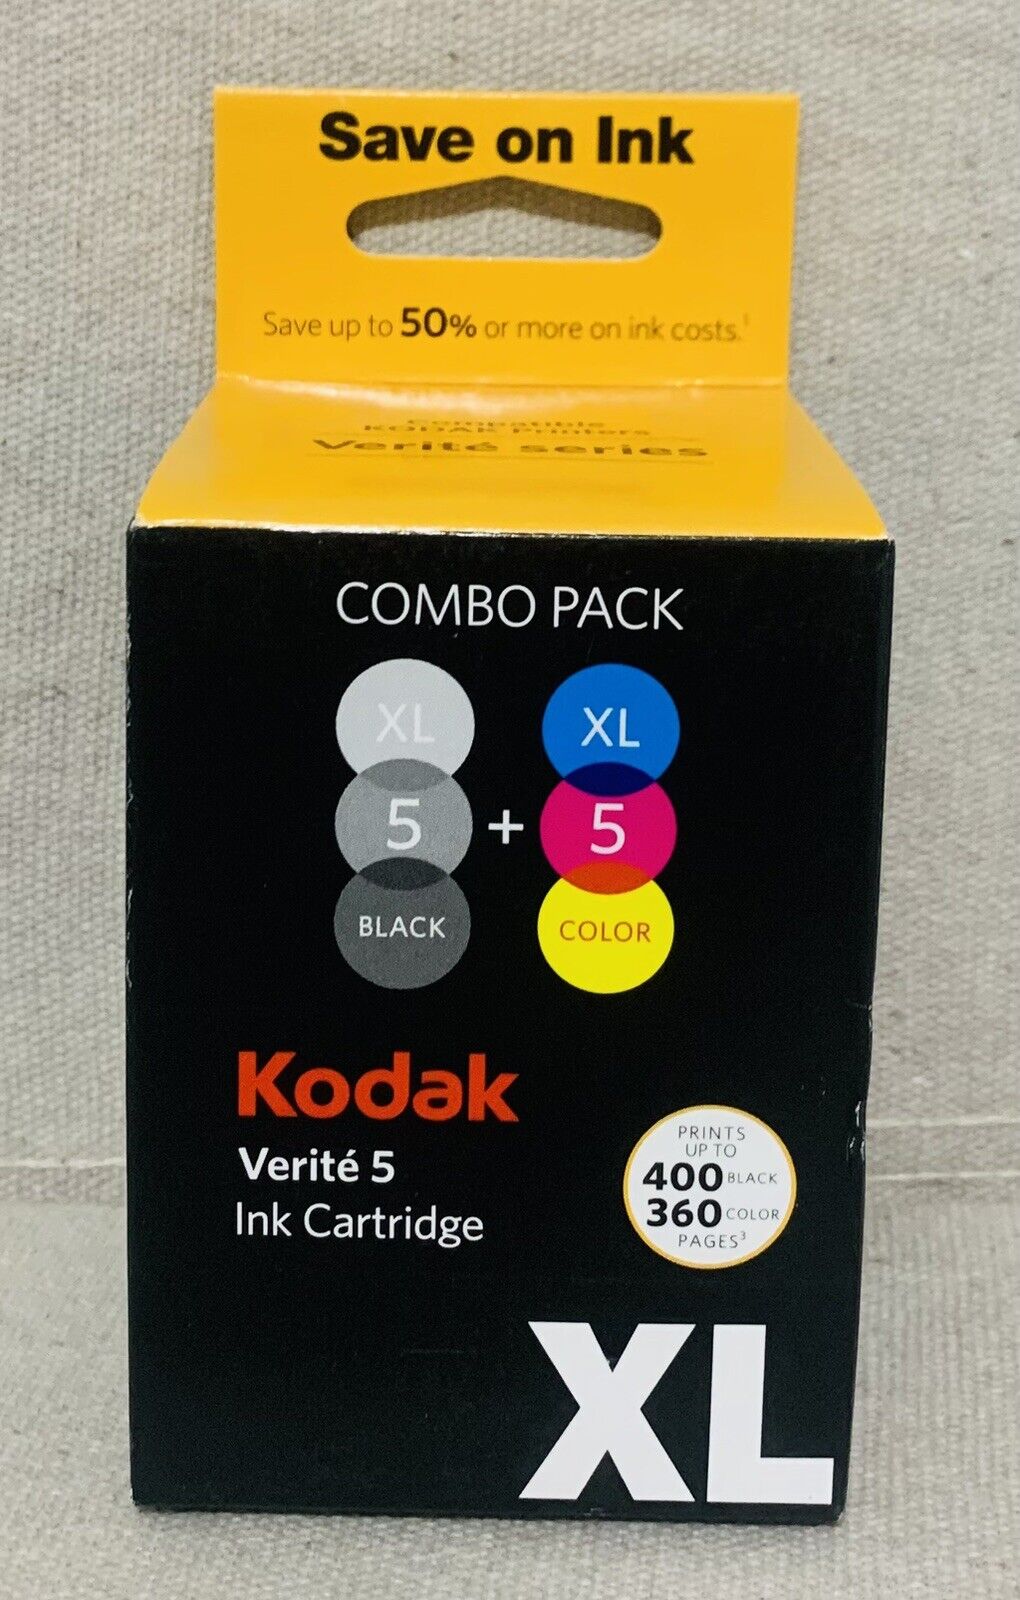 Kodak Verite 5 XL Combo Pack Ink Cartridge Black & Color XL Cartridge New Sealed